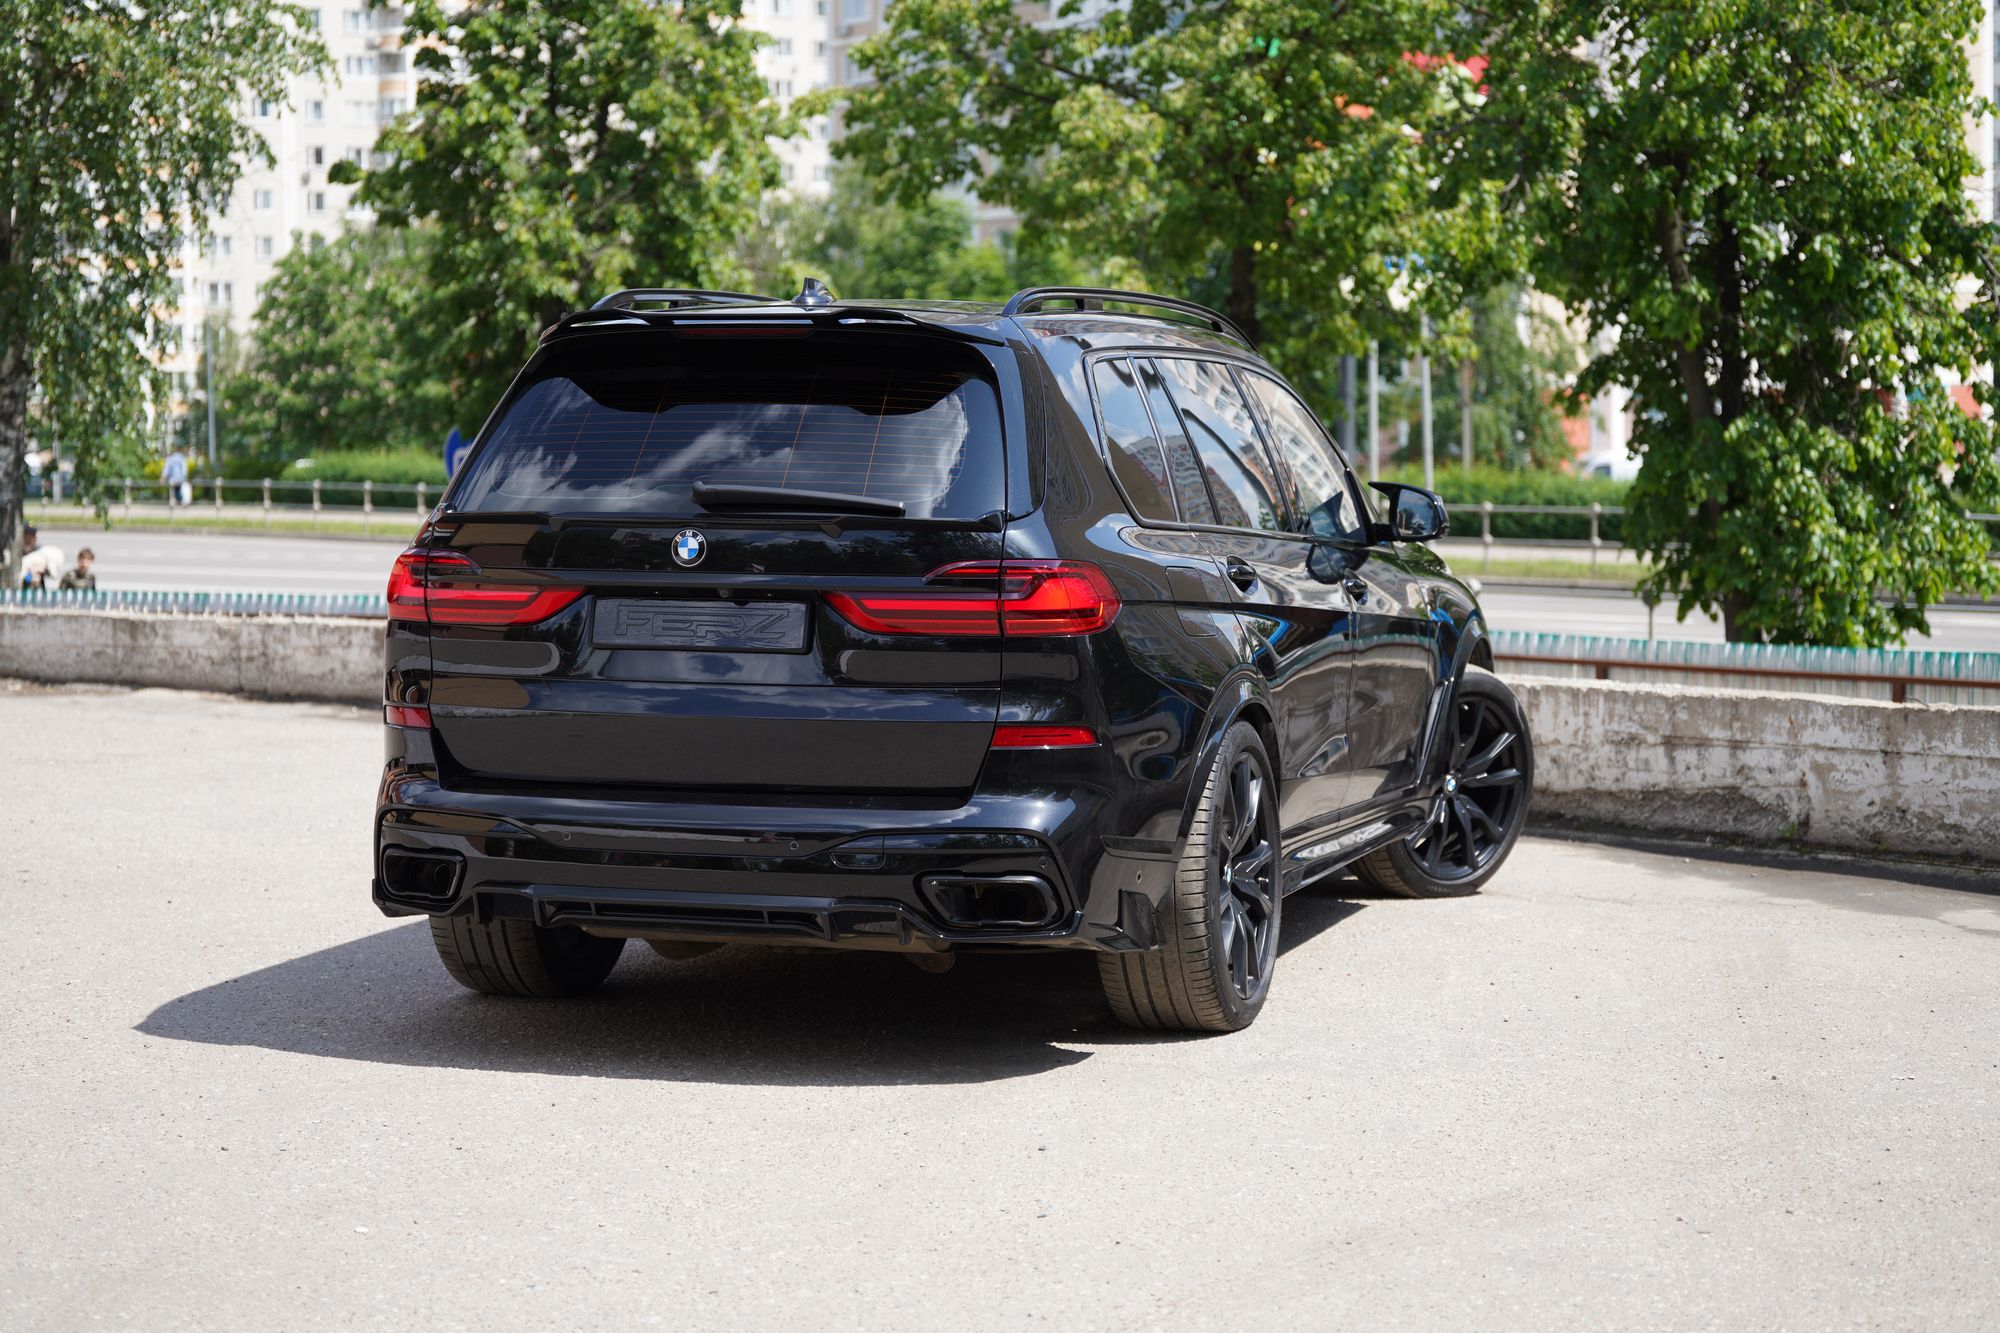 BMW X7 Black edition